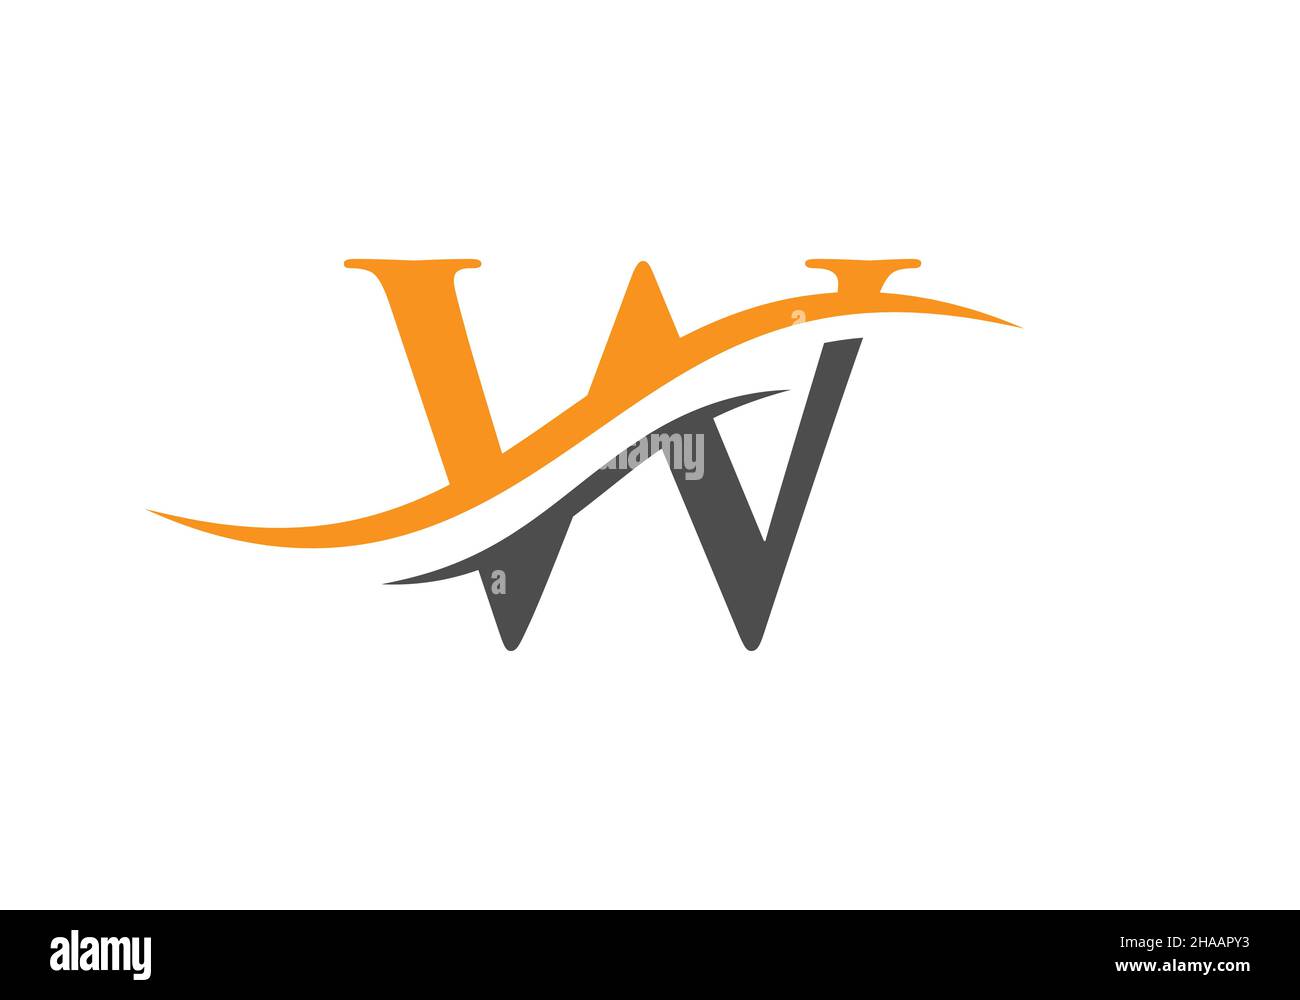 W company logo and symbol design Royalty Free Vector Image